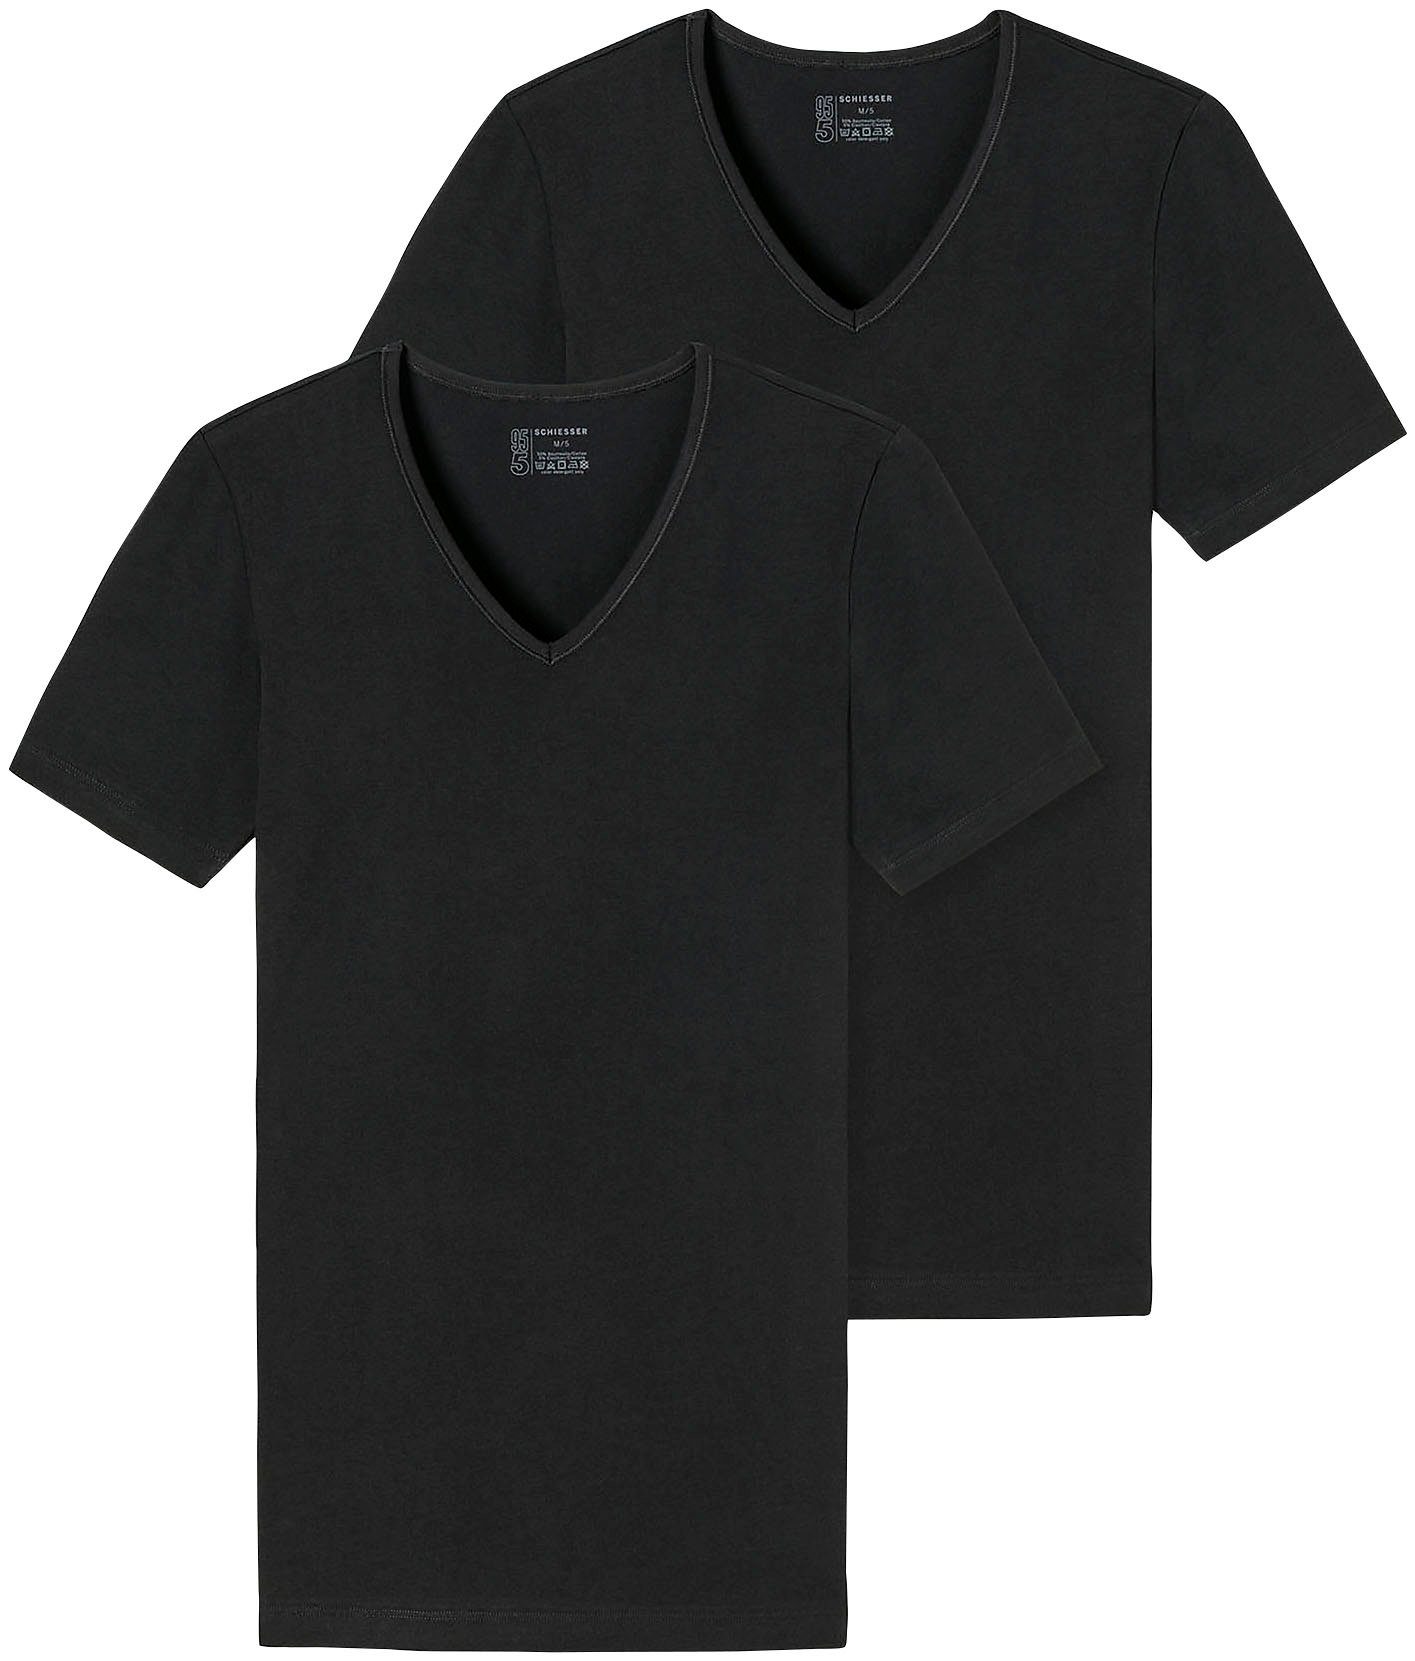 Schiesser V-Shirt (2er-Pack) mit schwarz V-Ausschnitt